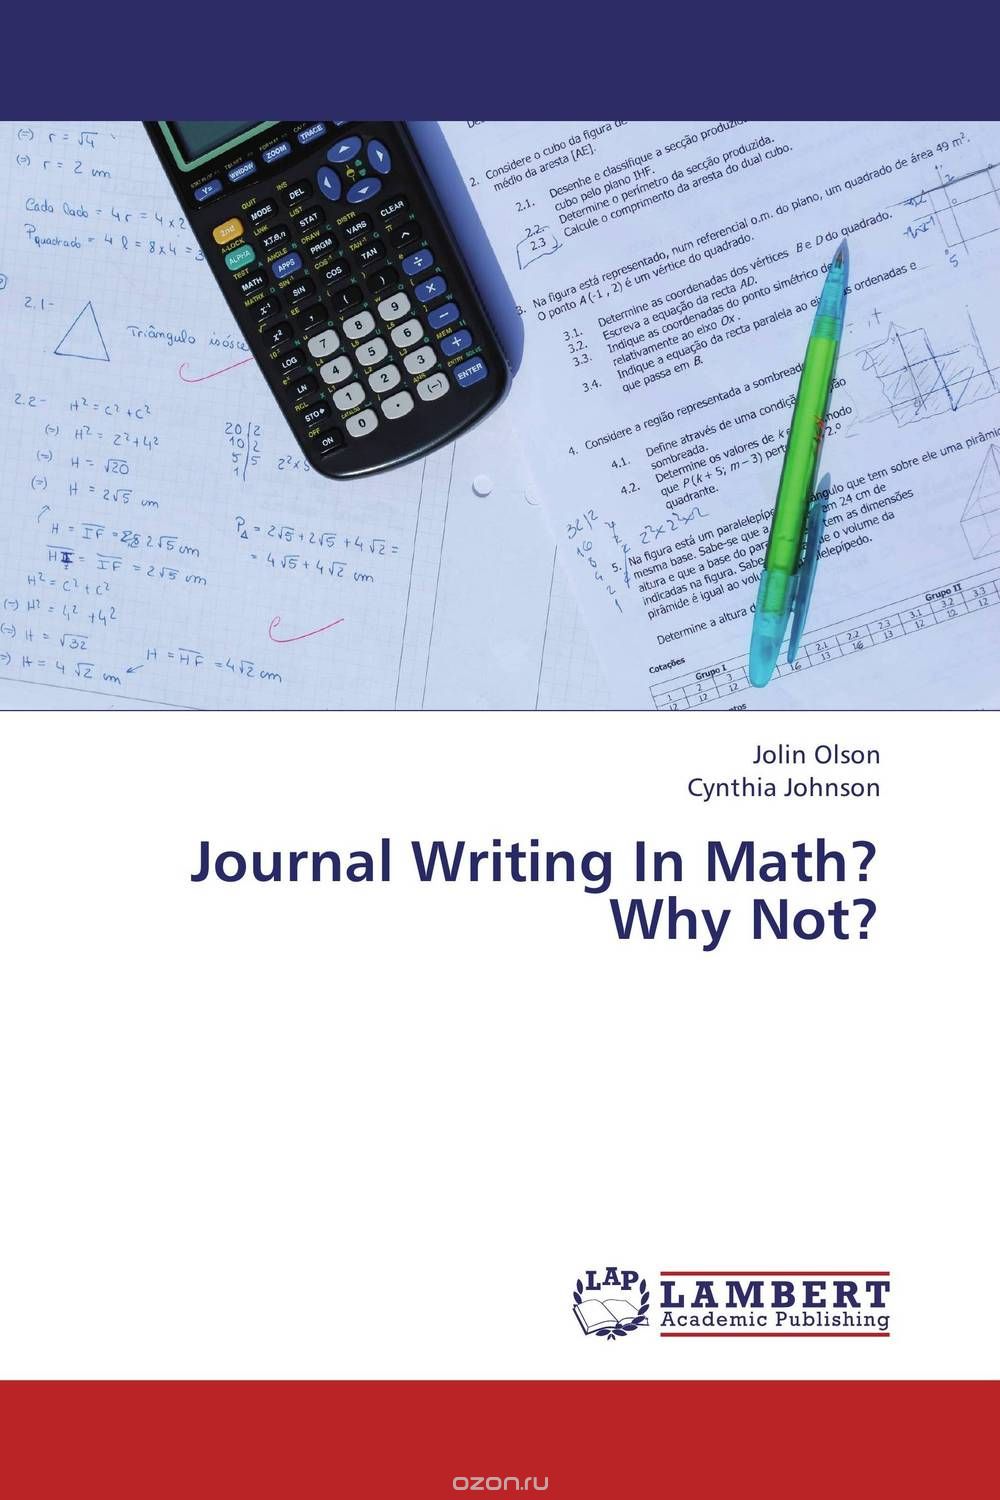 Скачать книгу "Journal Writing In Math? Why Not?"